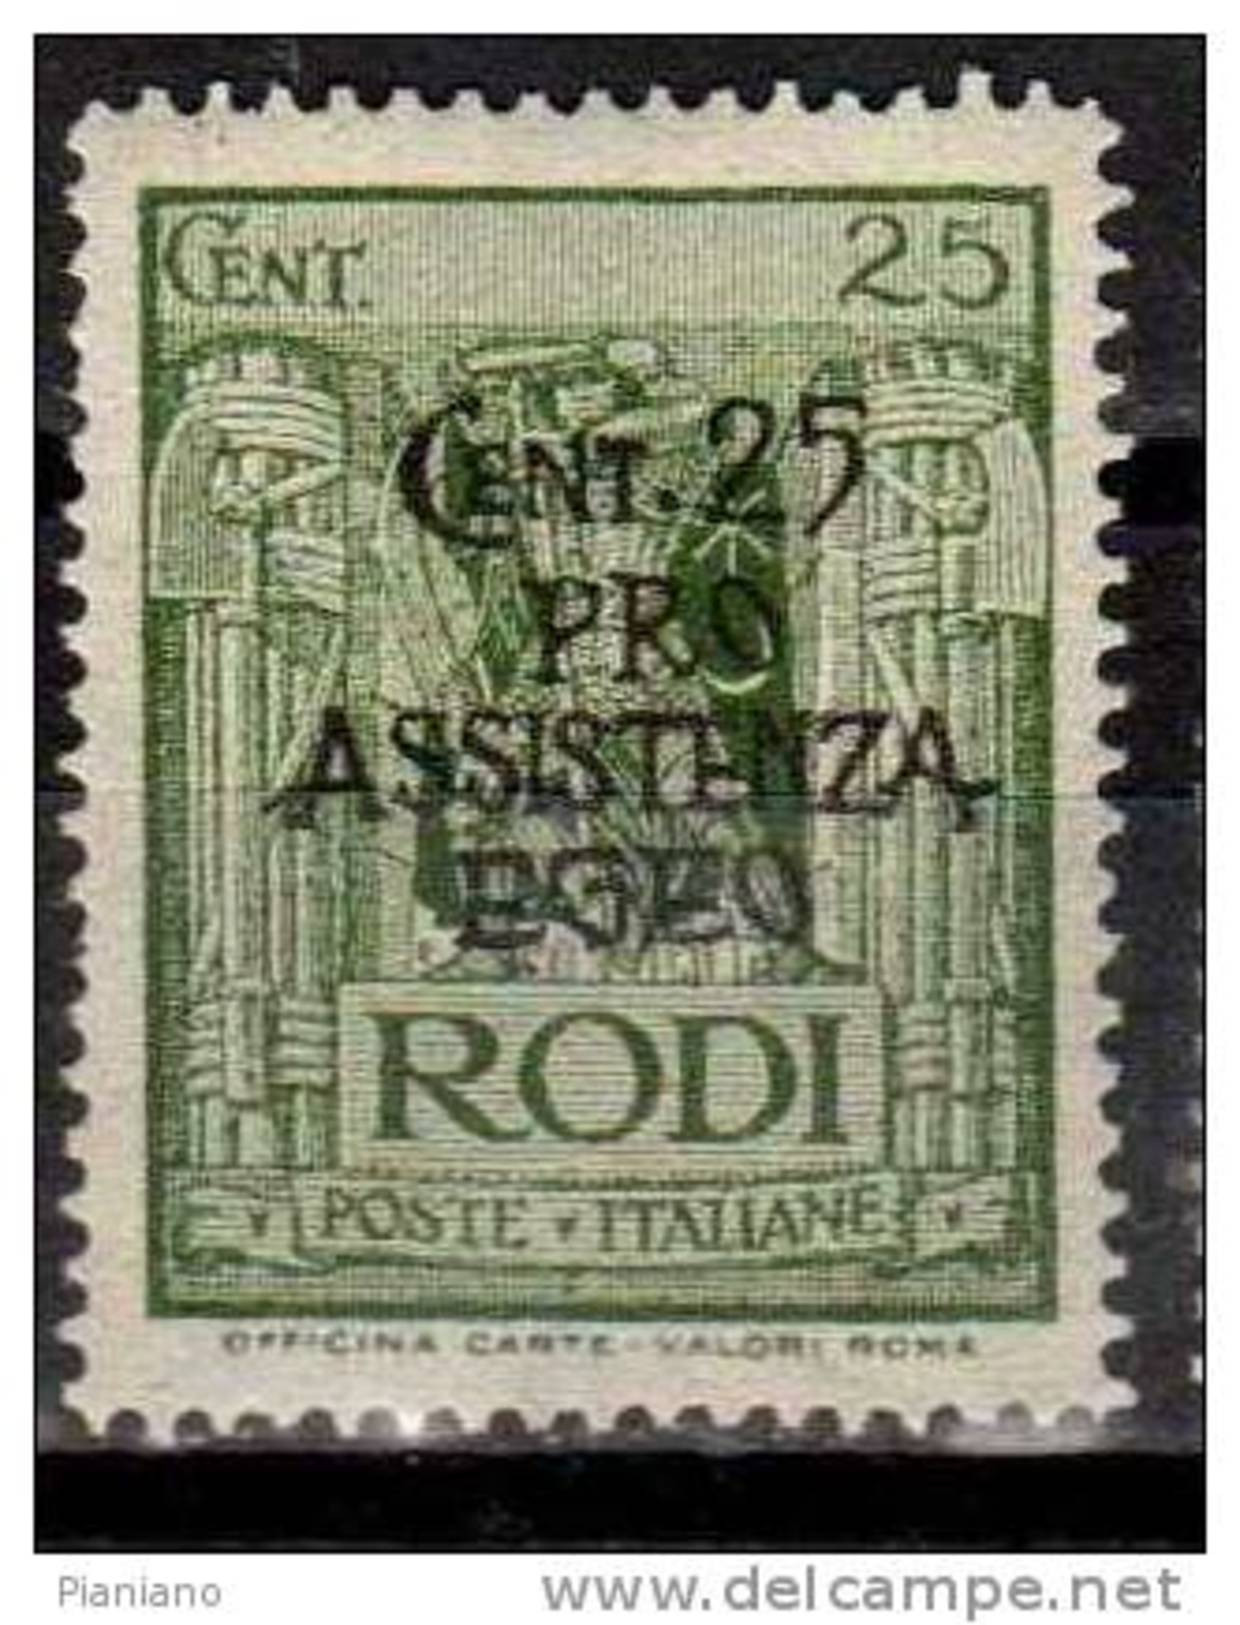 PIA - EGEO - 1943 : Occupazione Tedesca : Pro Assistenza Egeo  - (SAS  121) - Egeo (Ocu. Alemana)